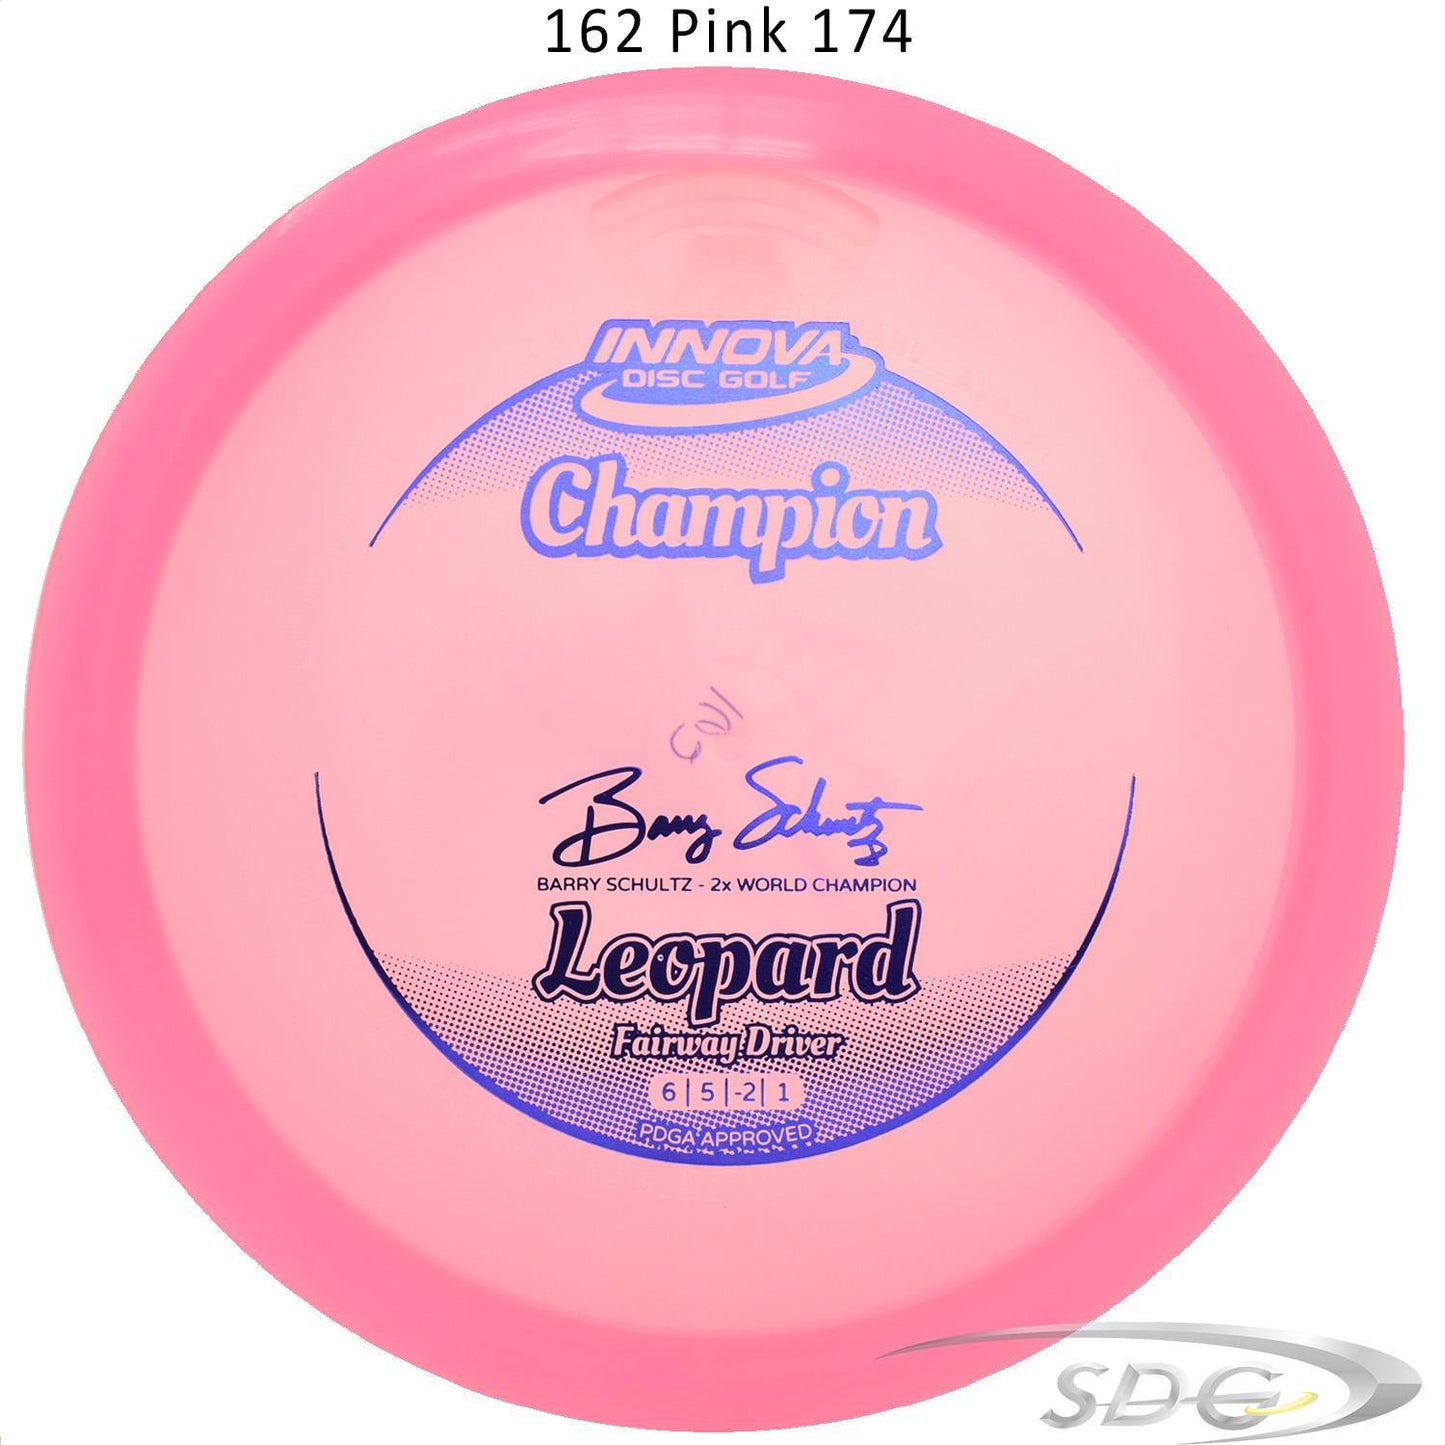 innova-champion-leopard-disc-golf-fairway-driver 162 Pink 174 